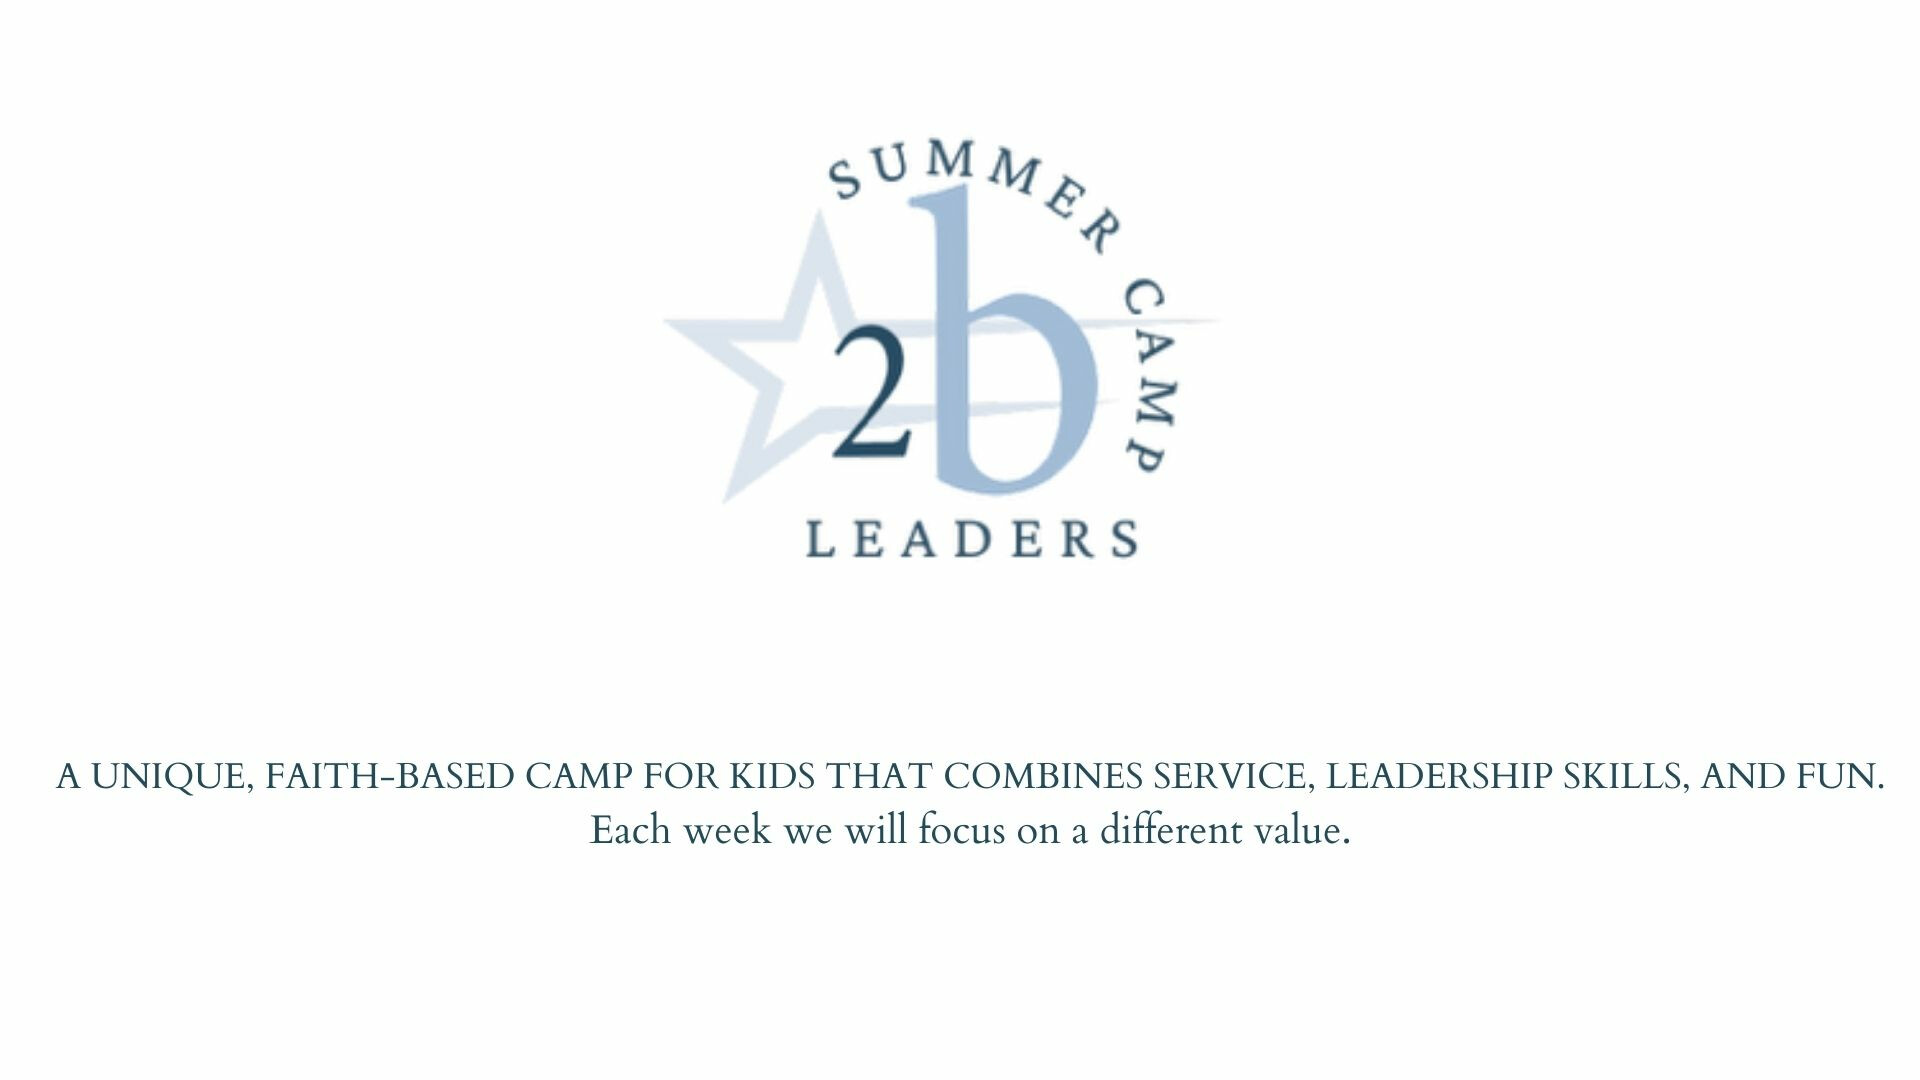 2b Leaders Summer Camp Logo